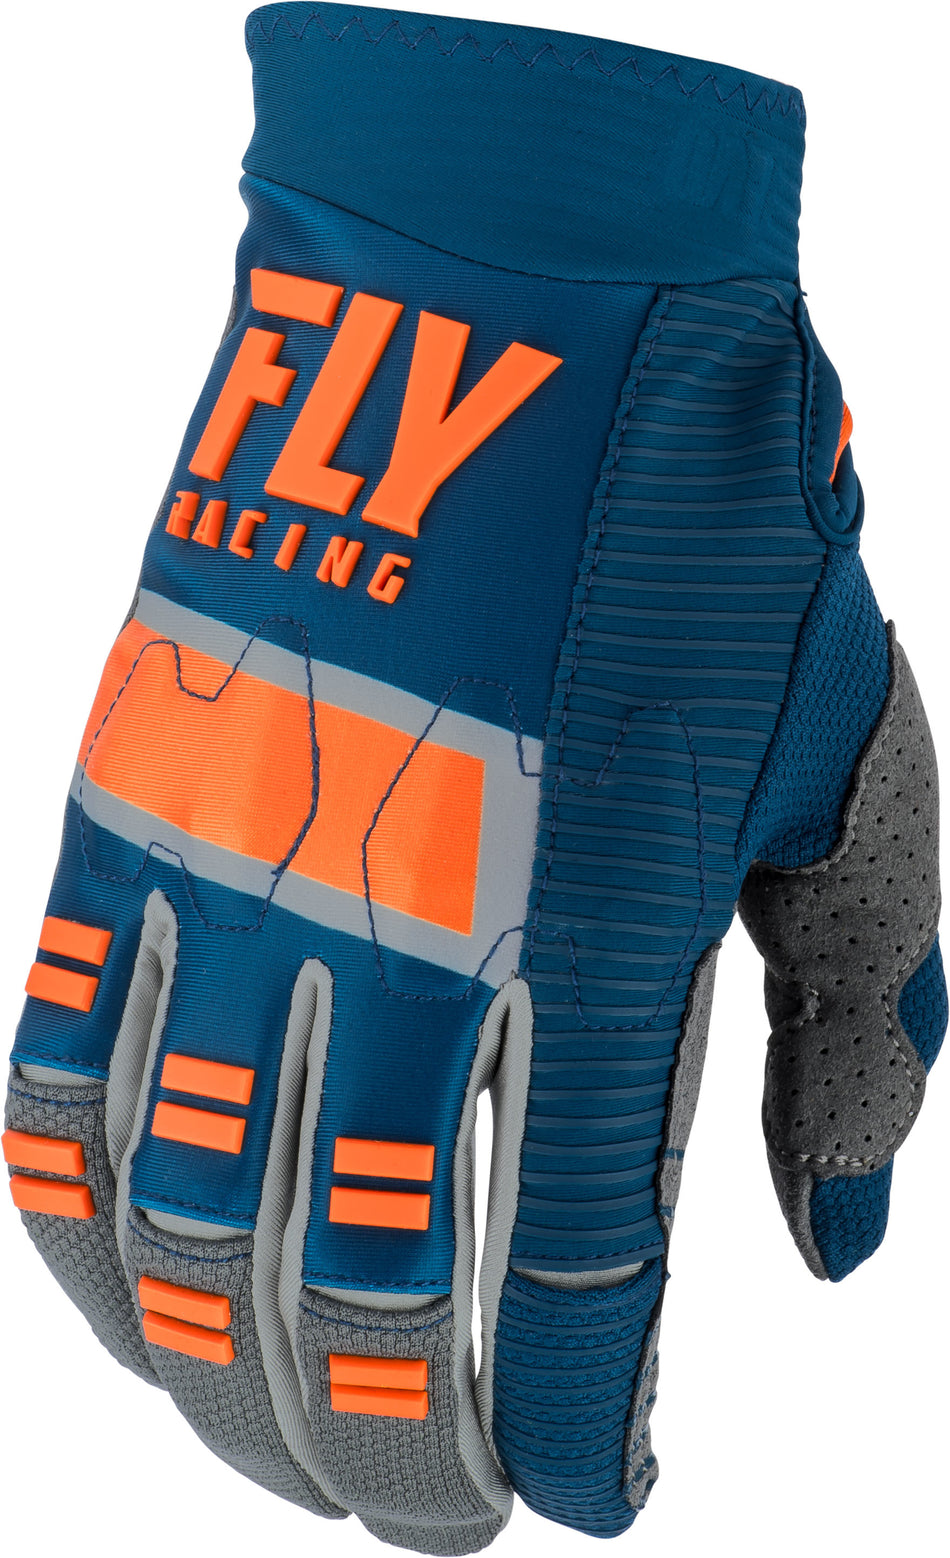 FLY RACING Evolution Dst Gloves Navy/Grey/Orange Sz 12 372-11112